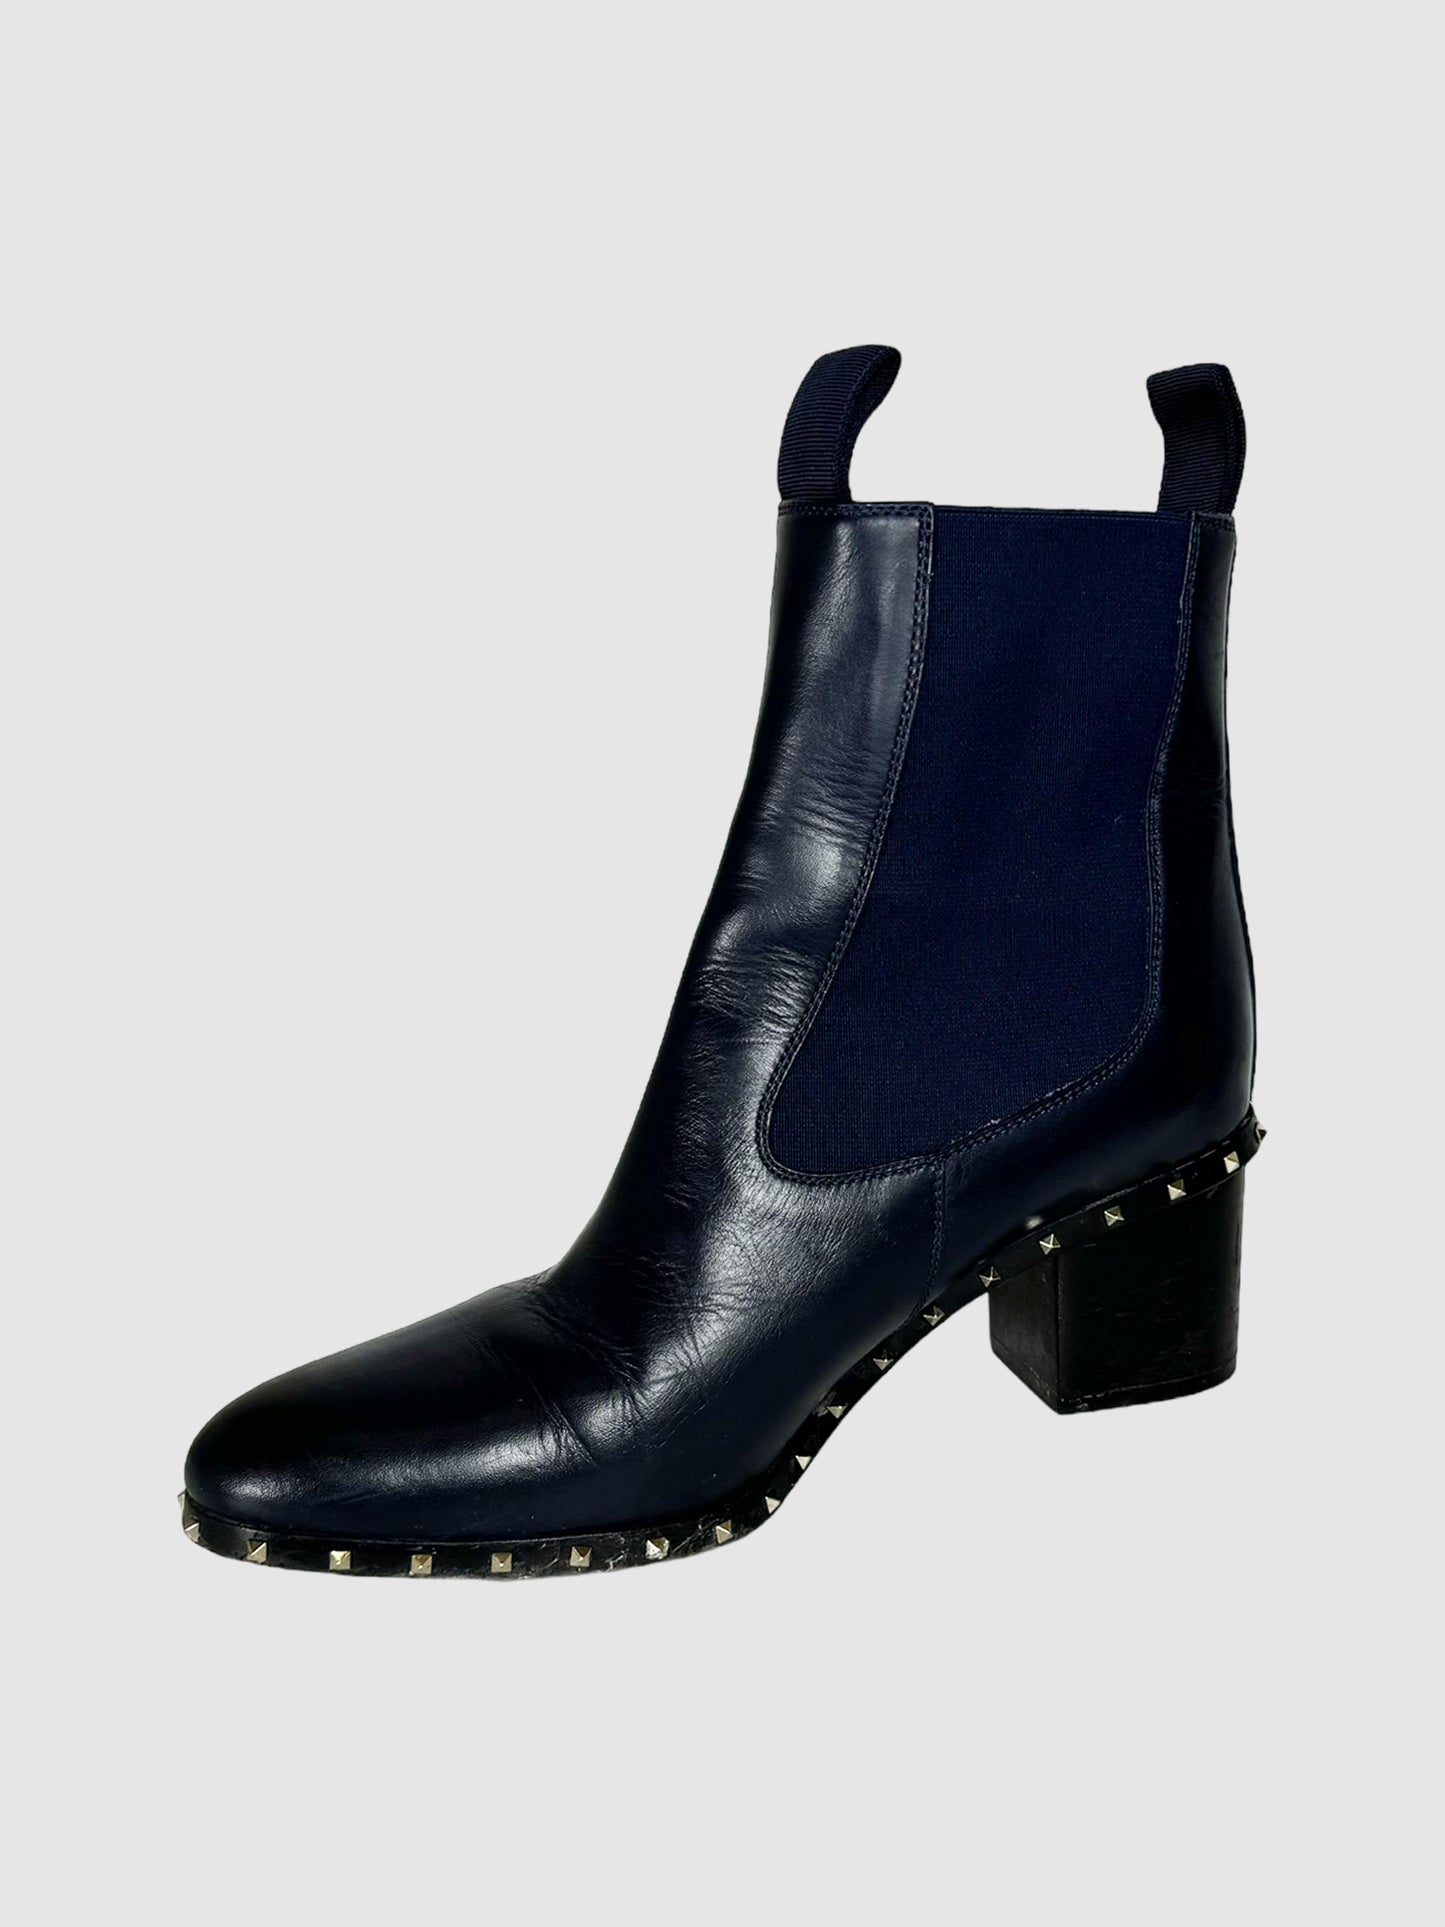 Valentino Garavani Rockstud Boots - Size 38.5